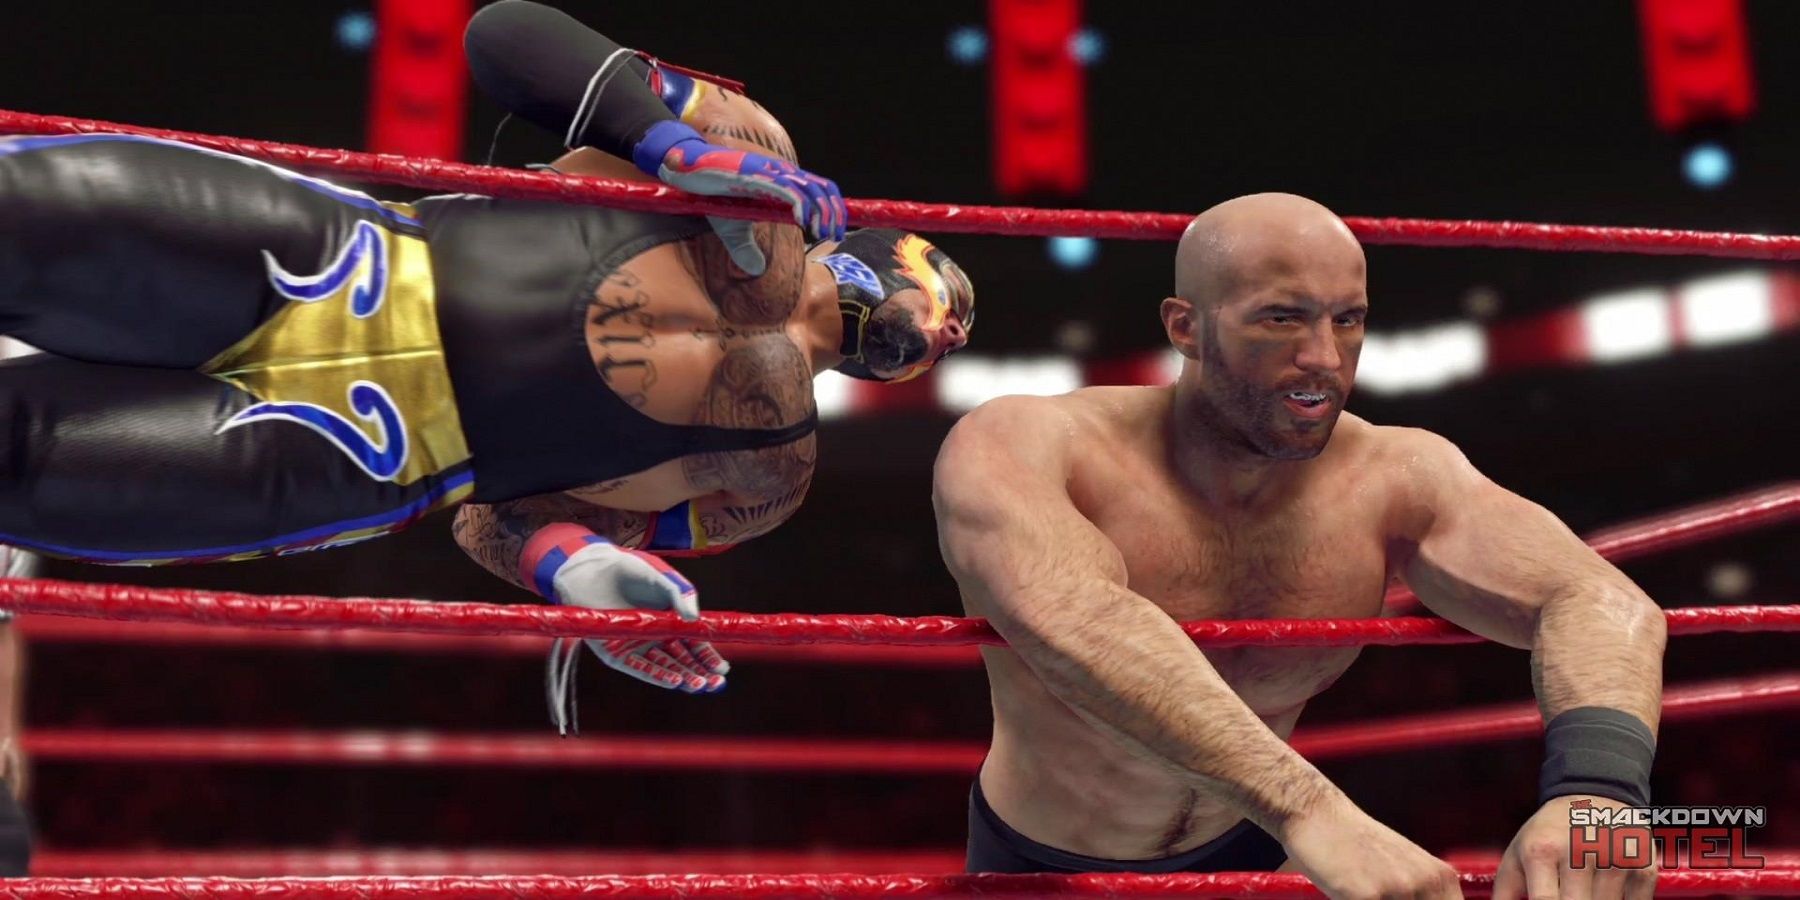 Mantan bintang WWE Cesaro melakukan kesalahan di tengah pertandingan kandang baja di WWE 2K22.